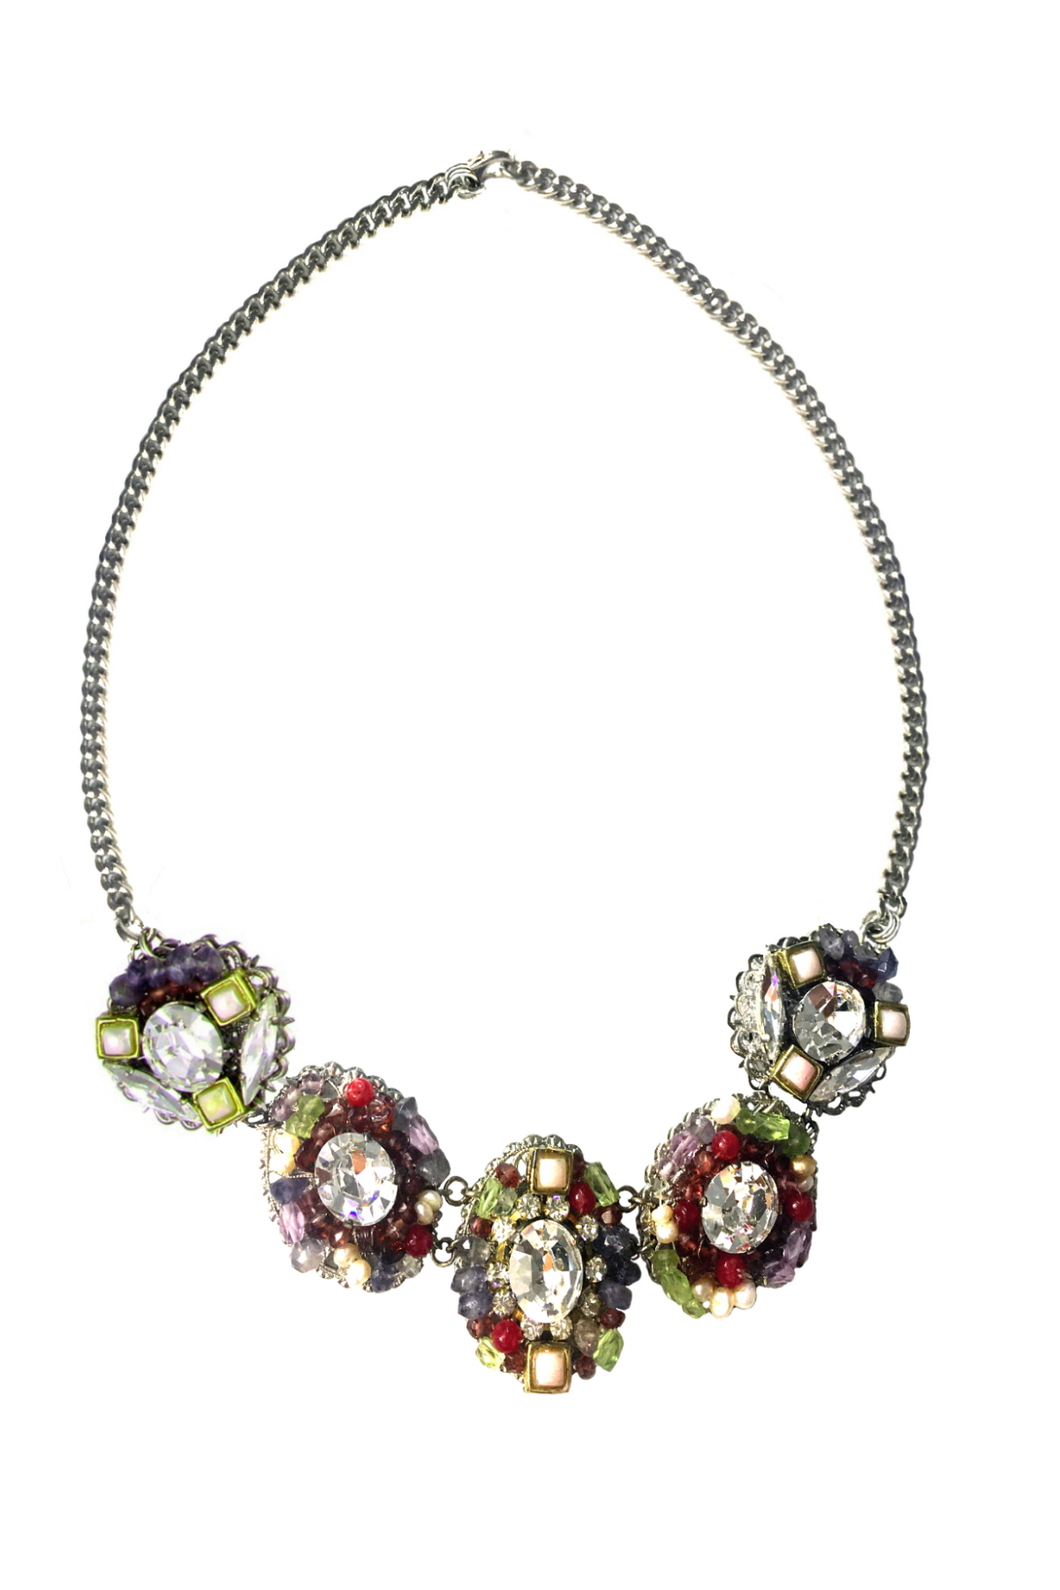 SALE - Claire Swarovski Crystals Semiprecious Stone Pearl Necklace